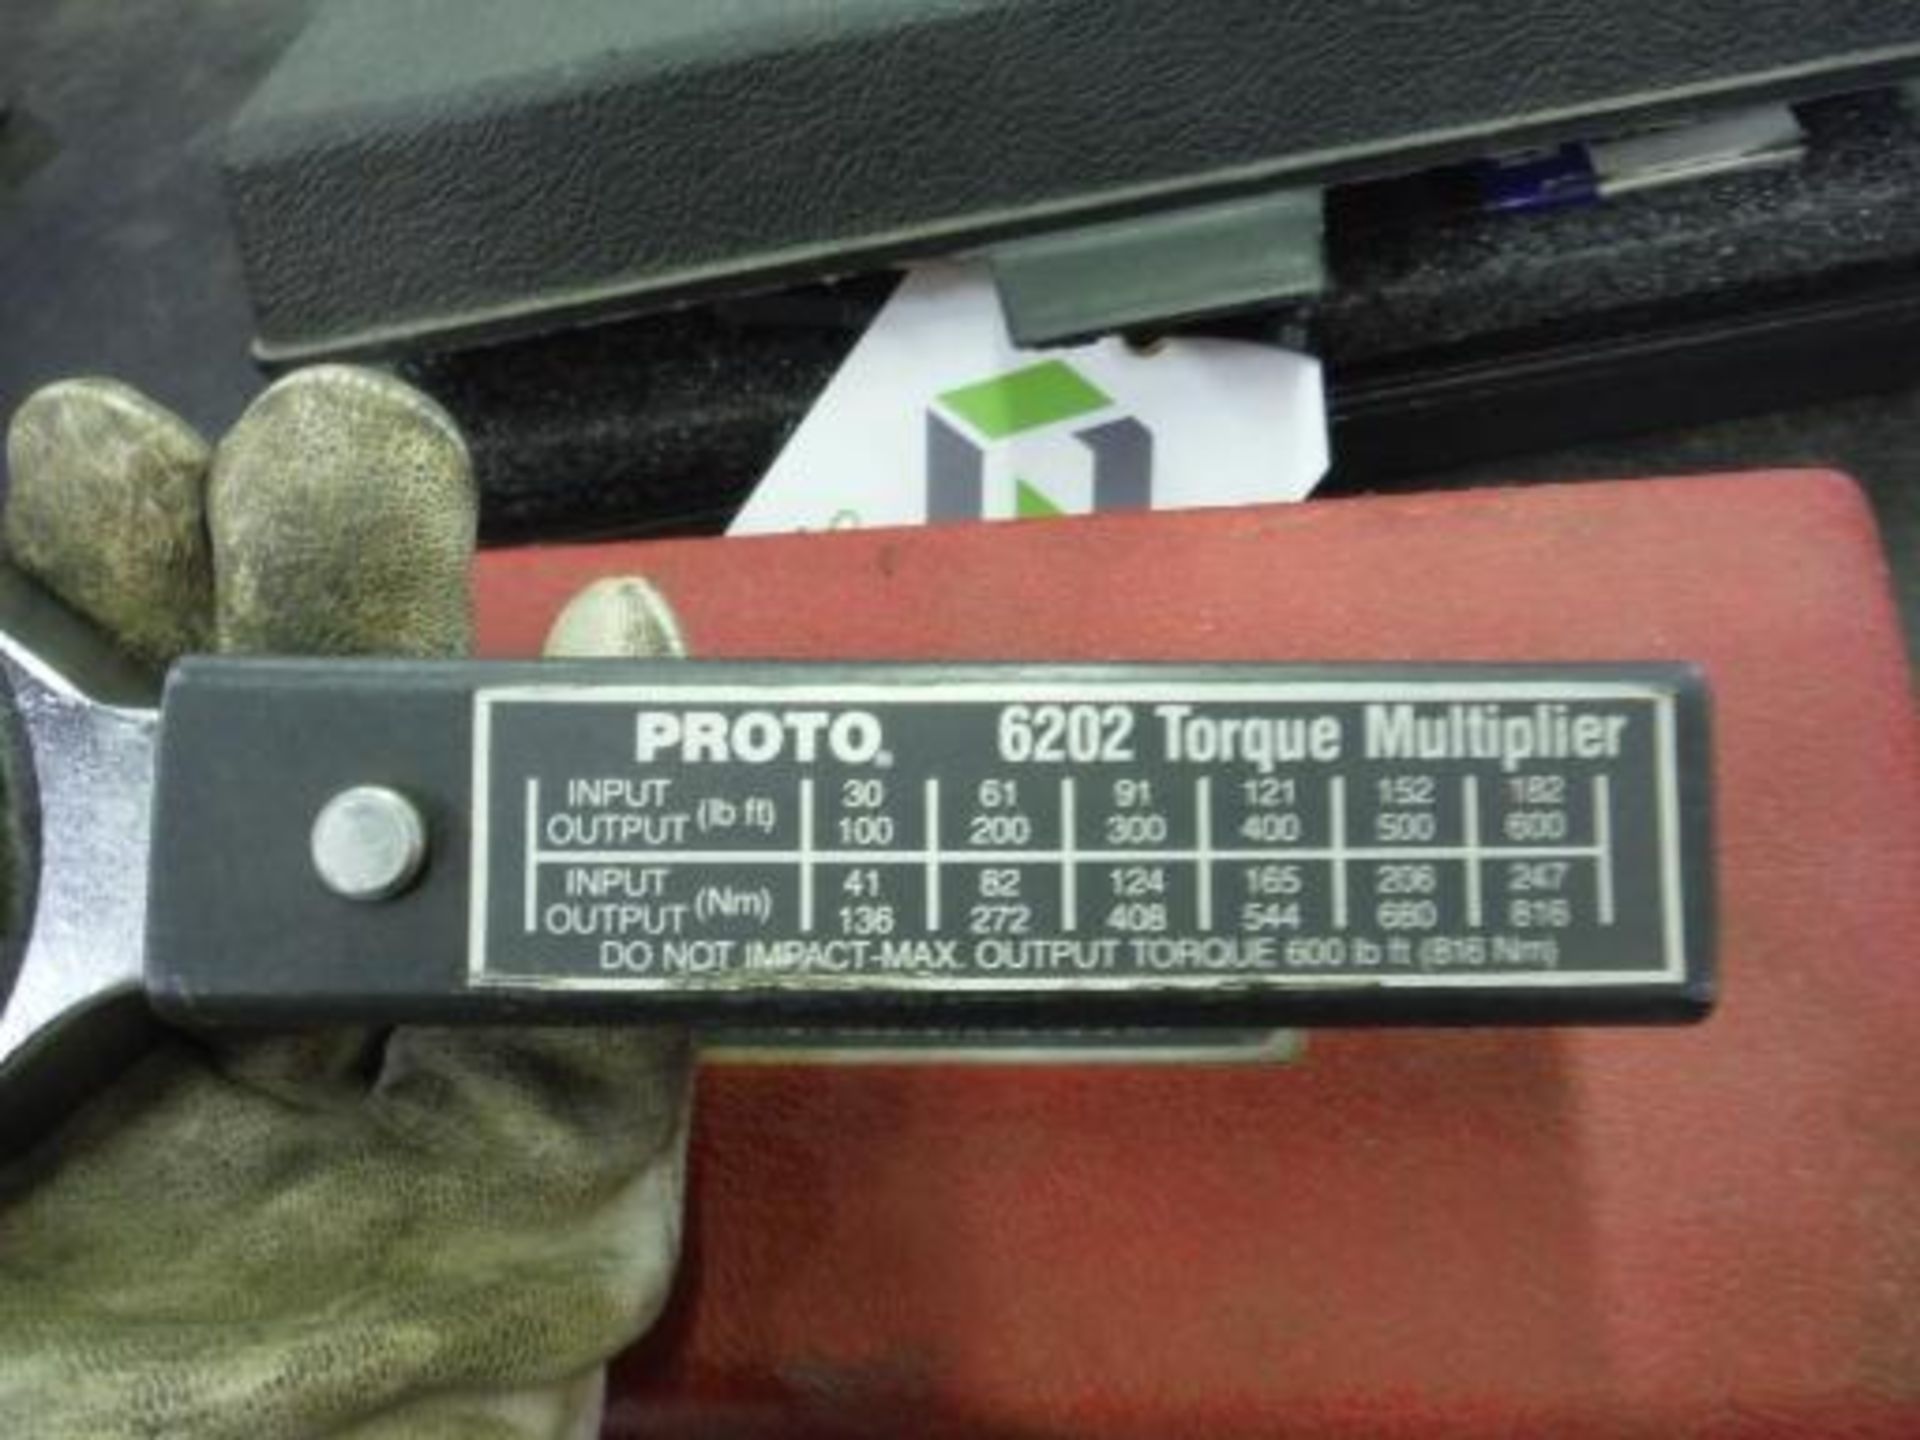 Proto torque multiplier in case. Located in Marion, Ohio Rigging Fee: $25 - Image 2 of 2